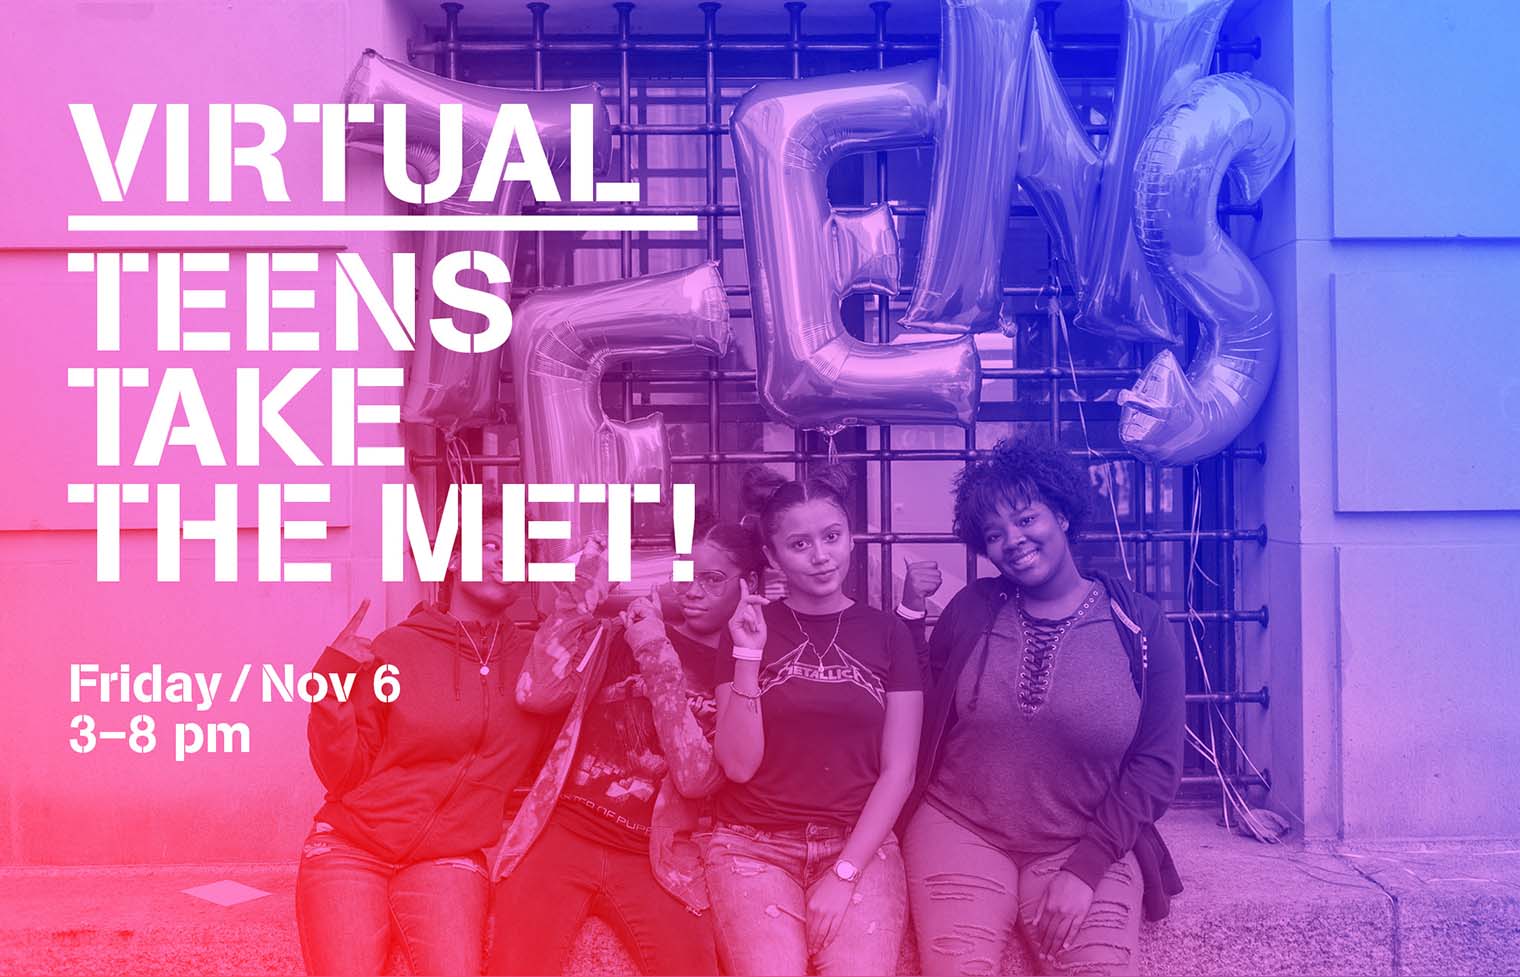 Virtual Teens Take The Met! Coming Soon to Screens Near You! The